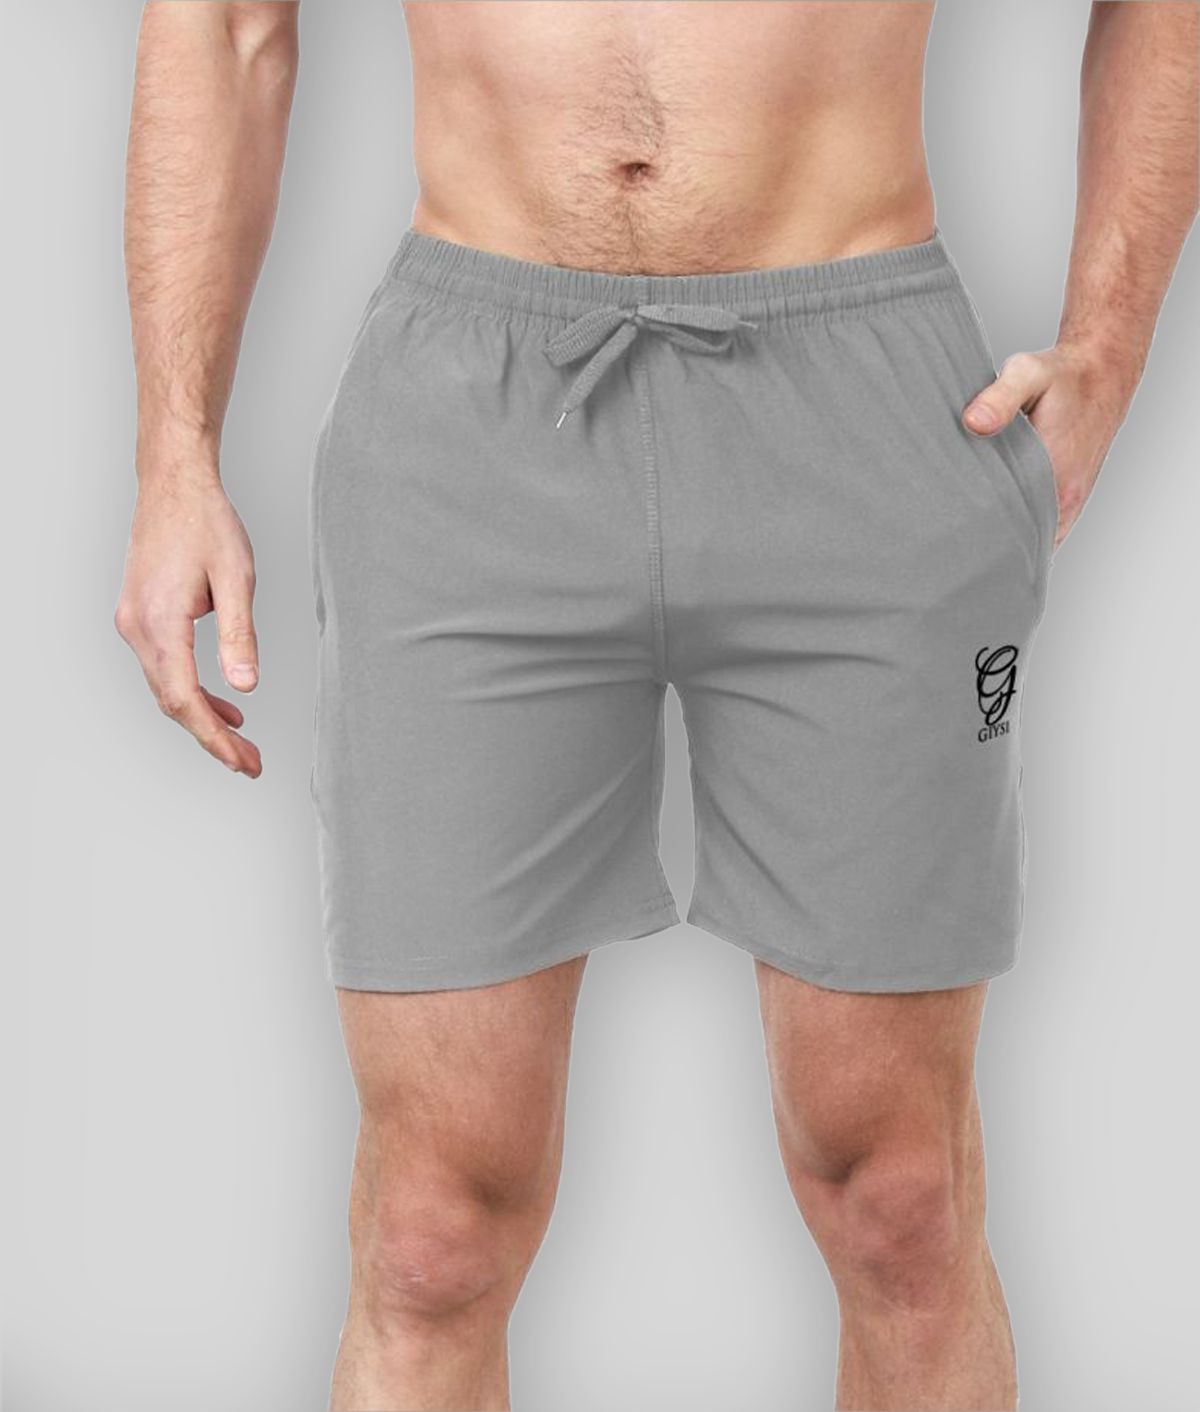 GIYSI Grey Polyester Viscose Fitness Shorts